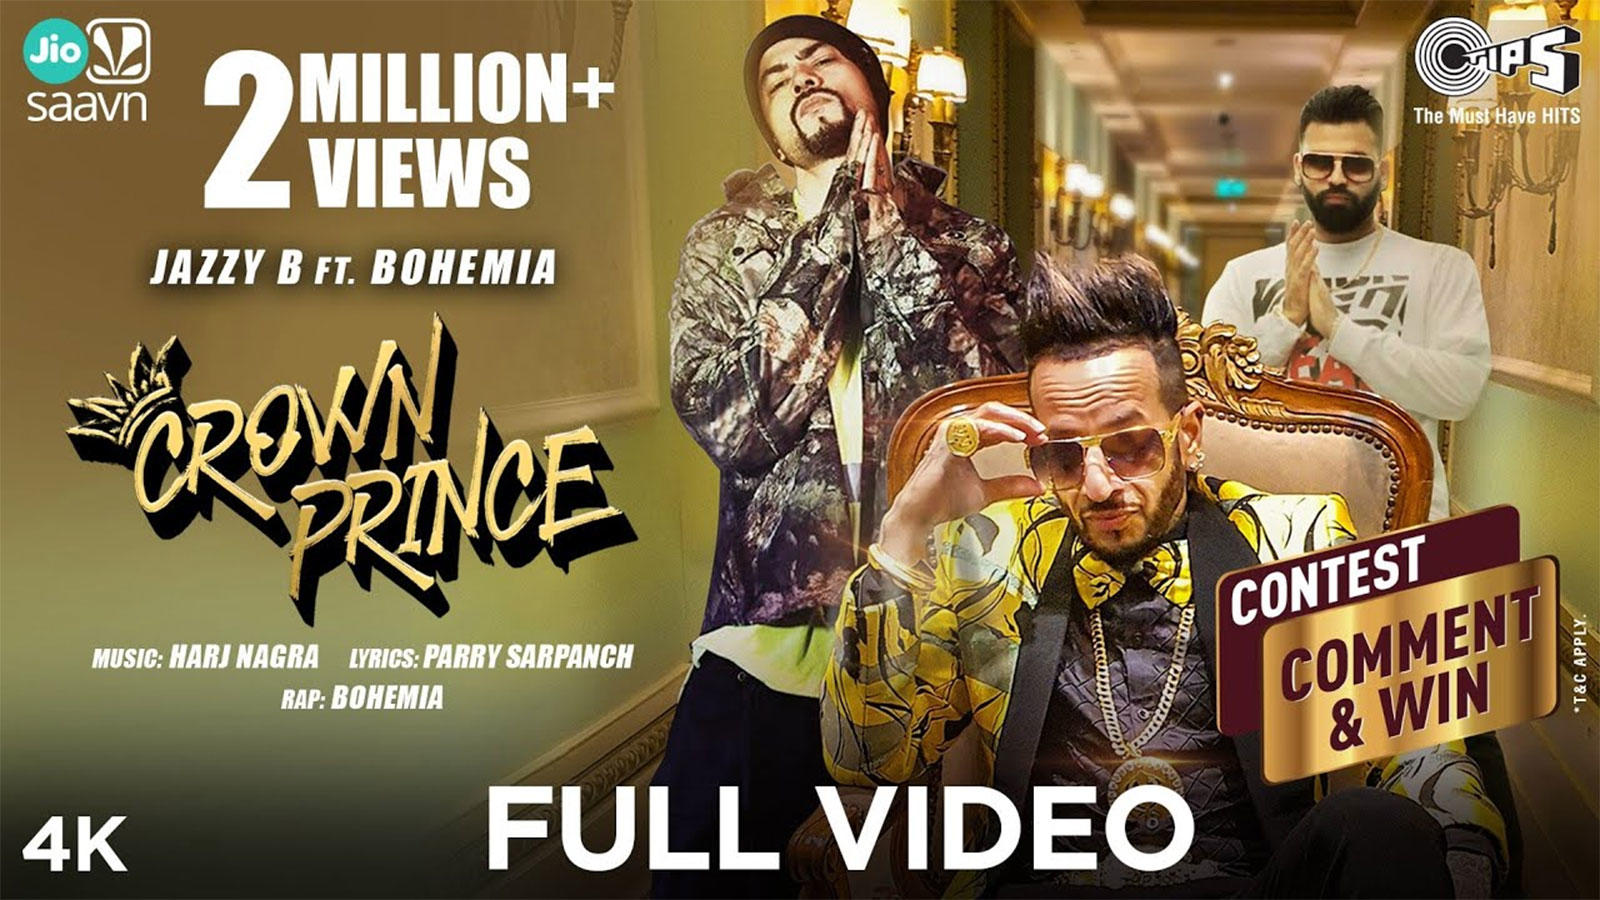 Punjabi Gana New Video Songs Geet 2020: Latest Punjabi Song 'Crown Prince'  Sung by Jazzy B Featuring Bohemia